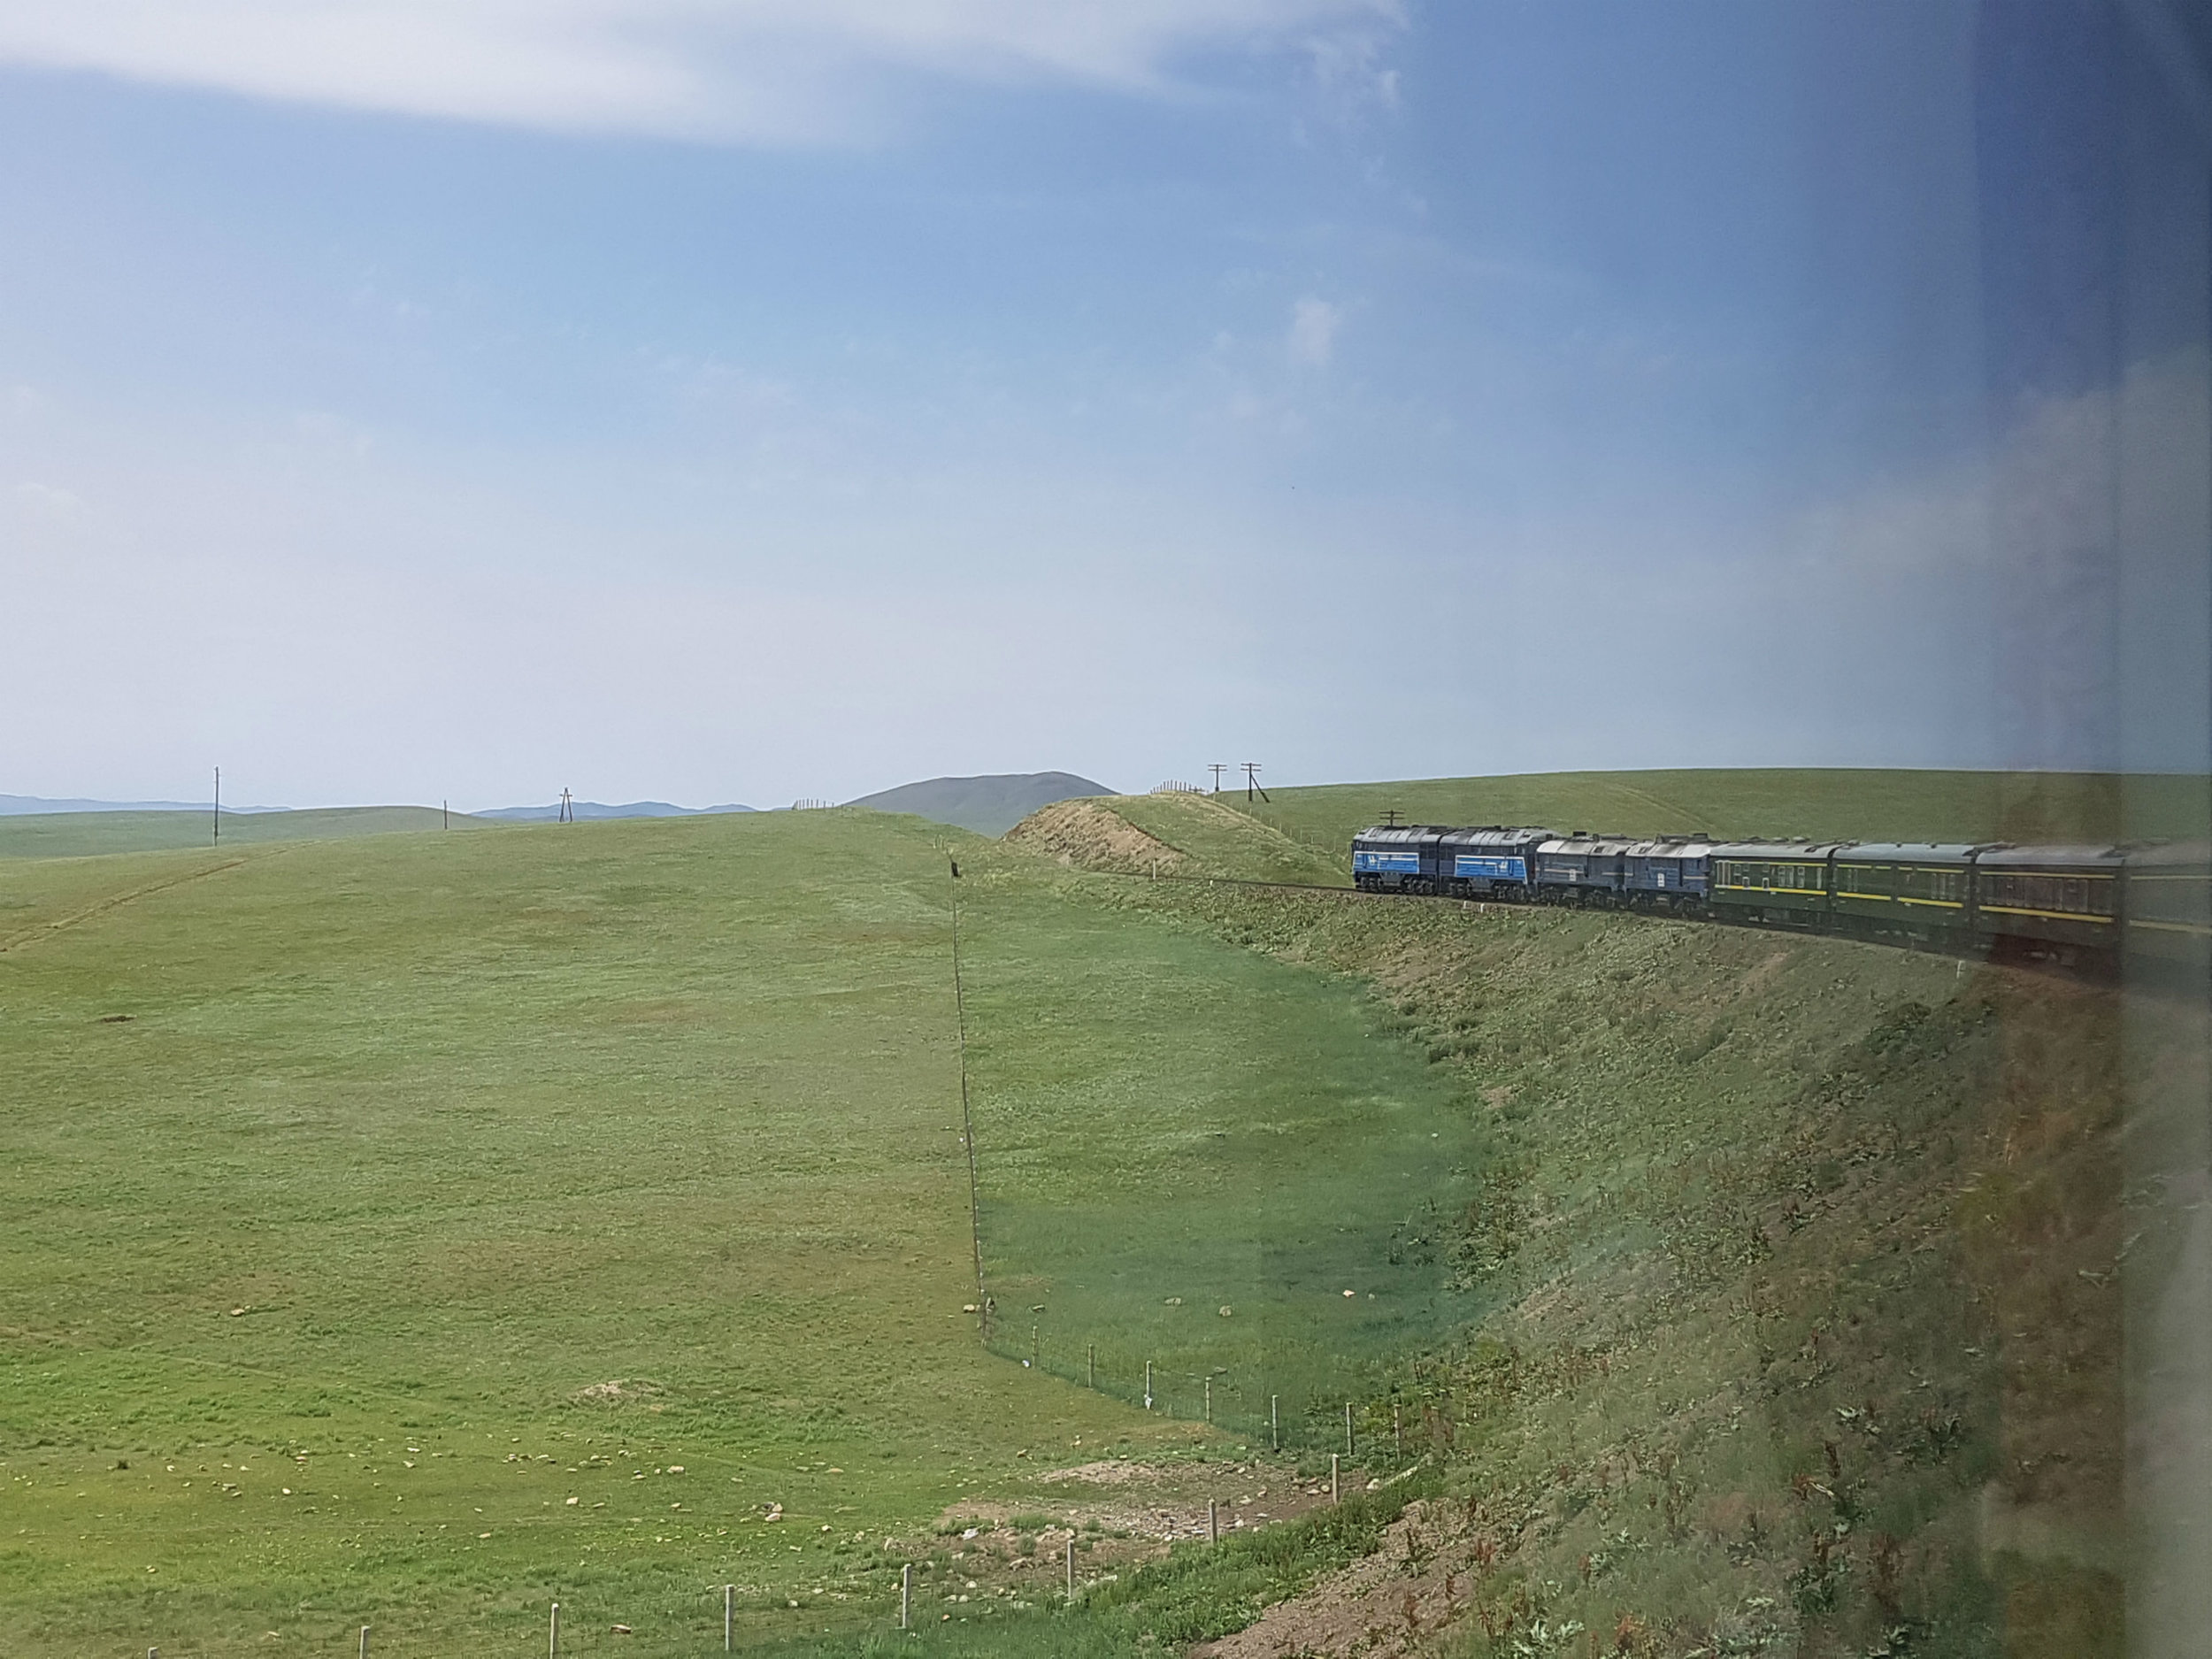 Our train driving through endless steppe